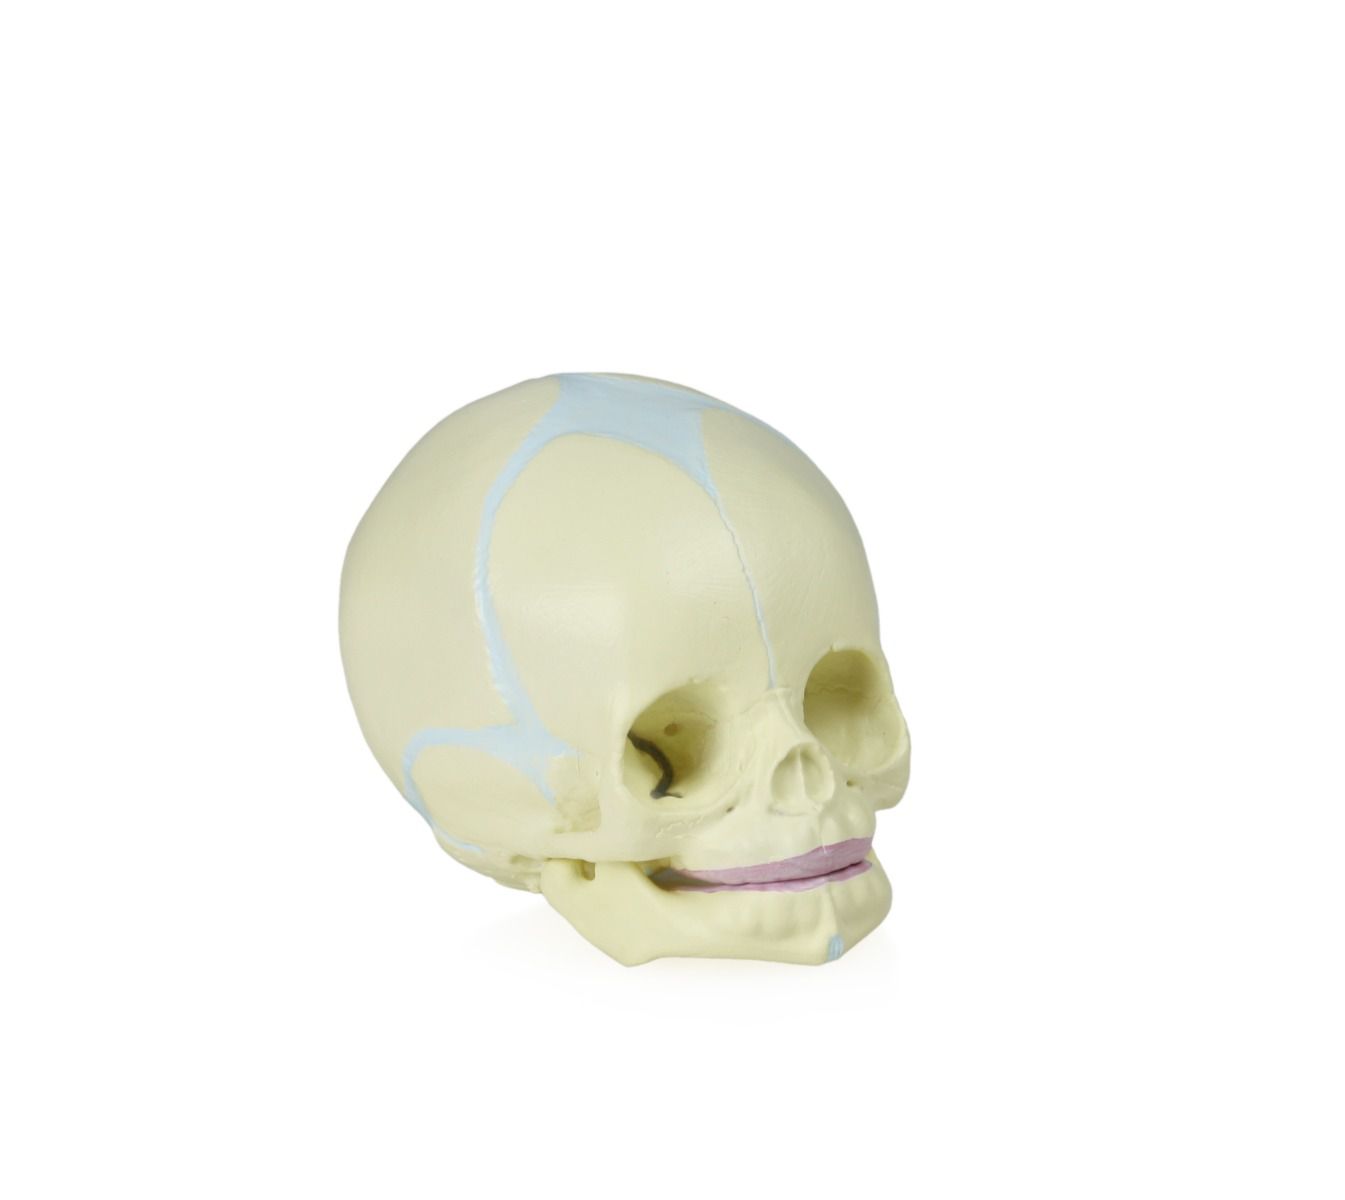 B10222 Human Fetal Skull